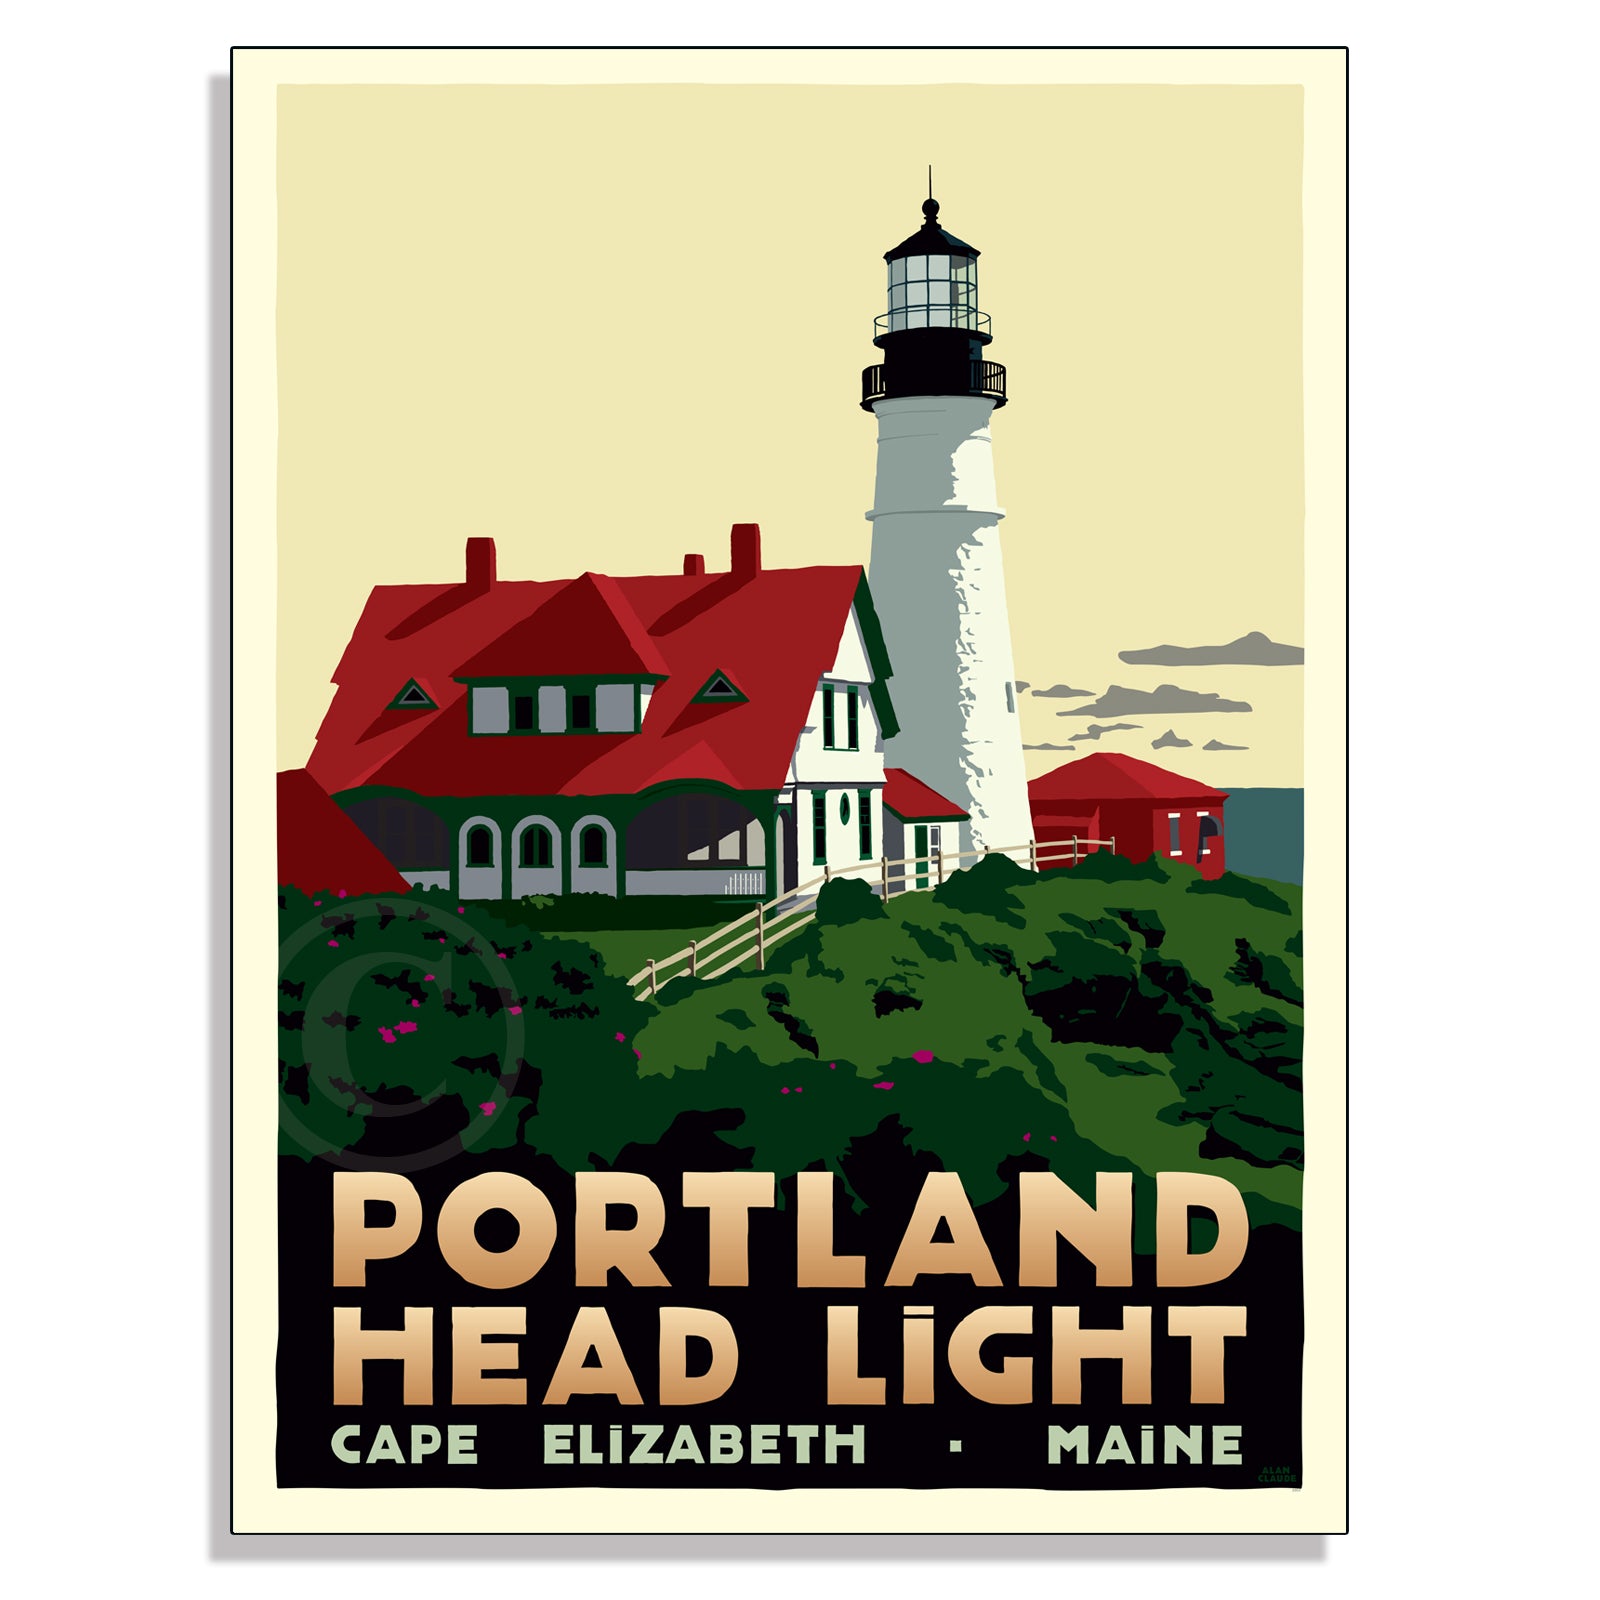 Portland Head Light Lighthouse Art Print 18" x 24" Travel Poster By Alan Claude - Maine